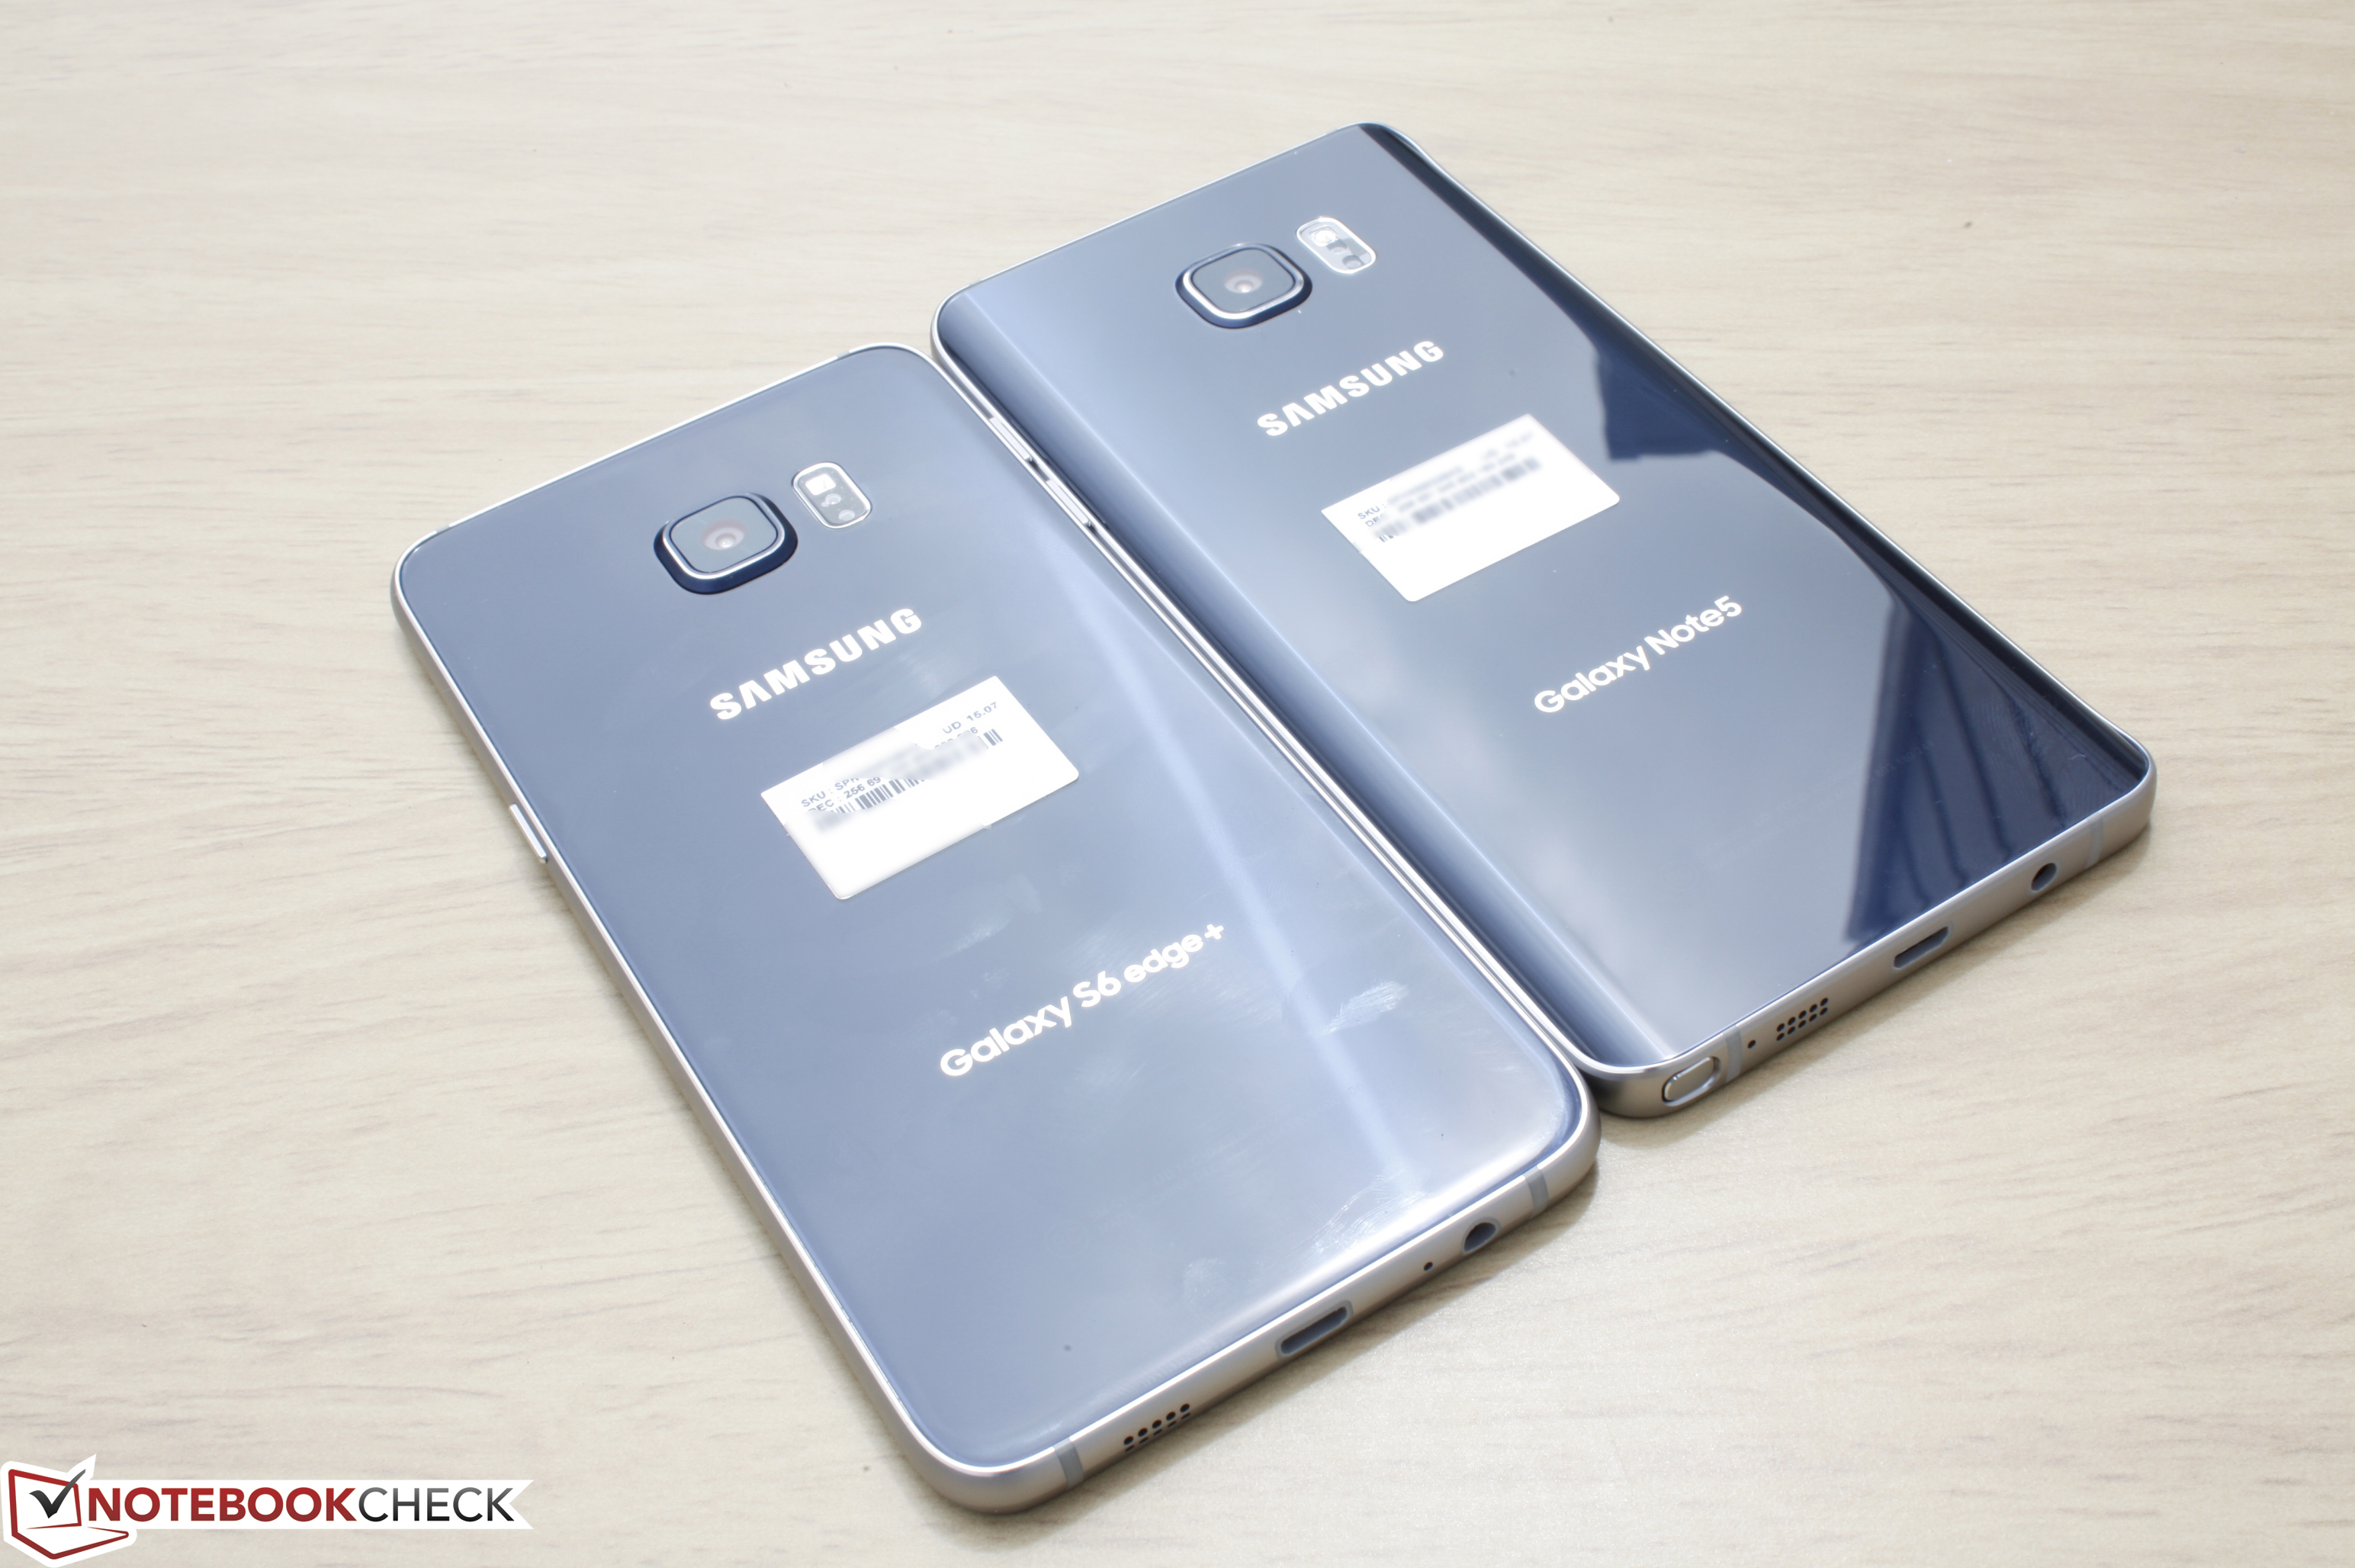 Meenemen kaas Ongrijpbaar Samsung Galaxy S6 Edge+ Smartphone Review - NotebookCheck.net Reviews